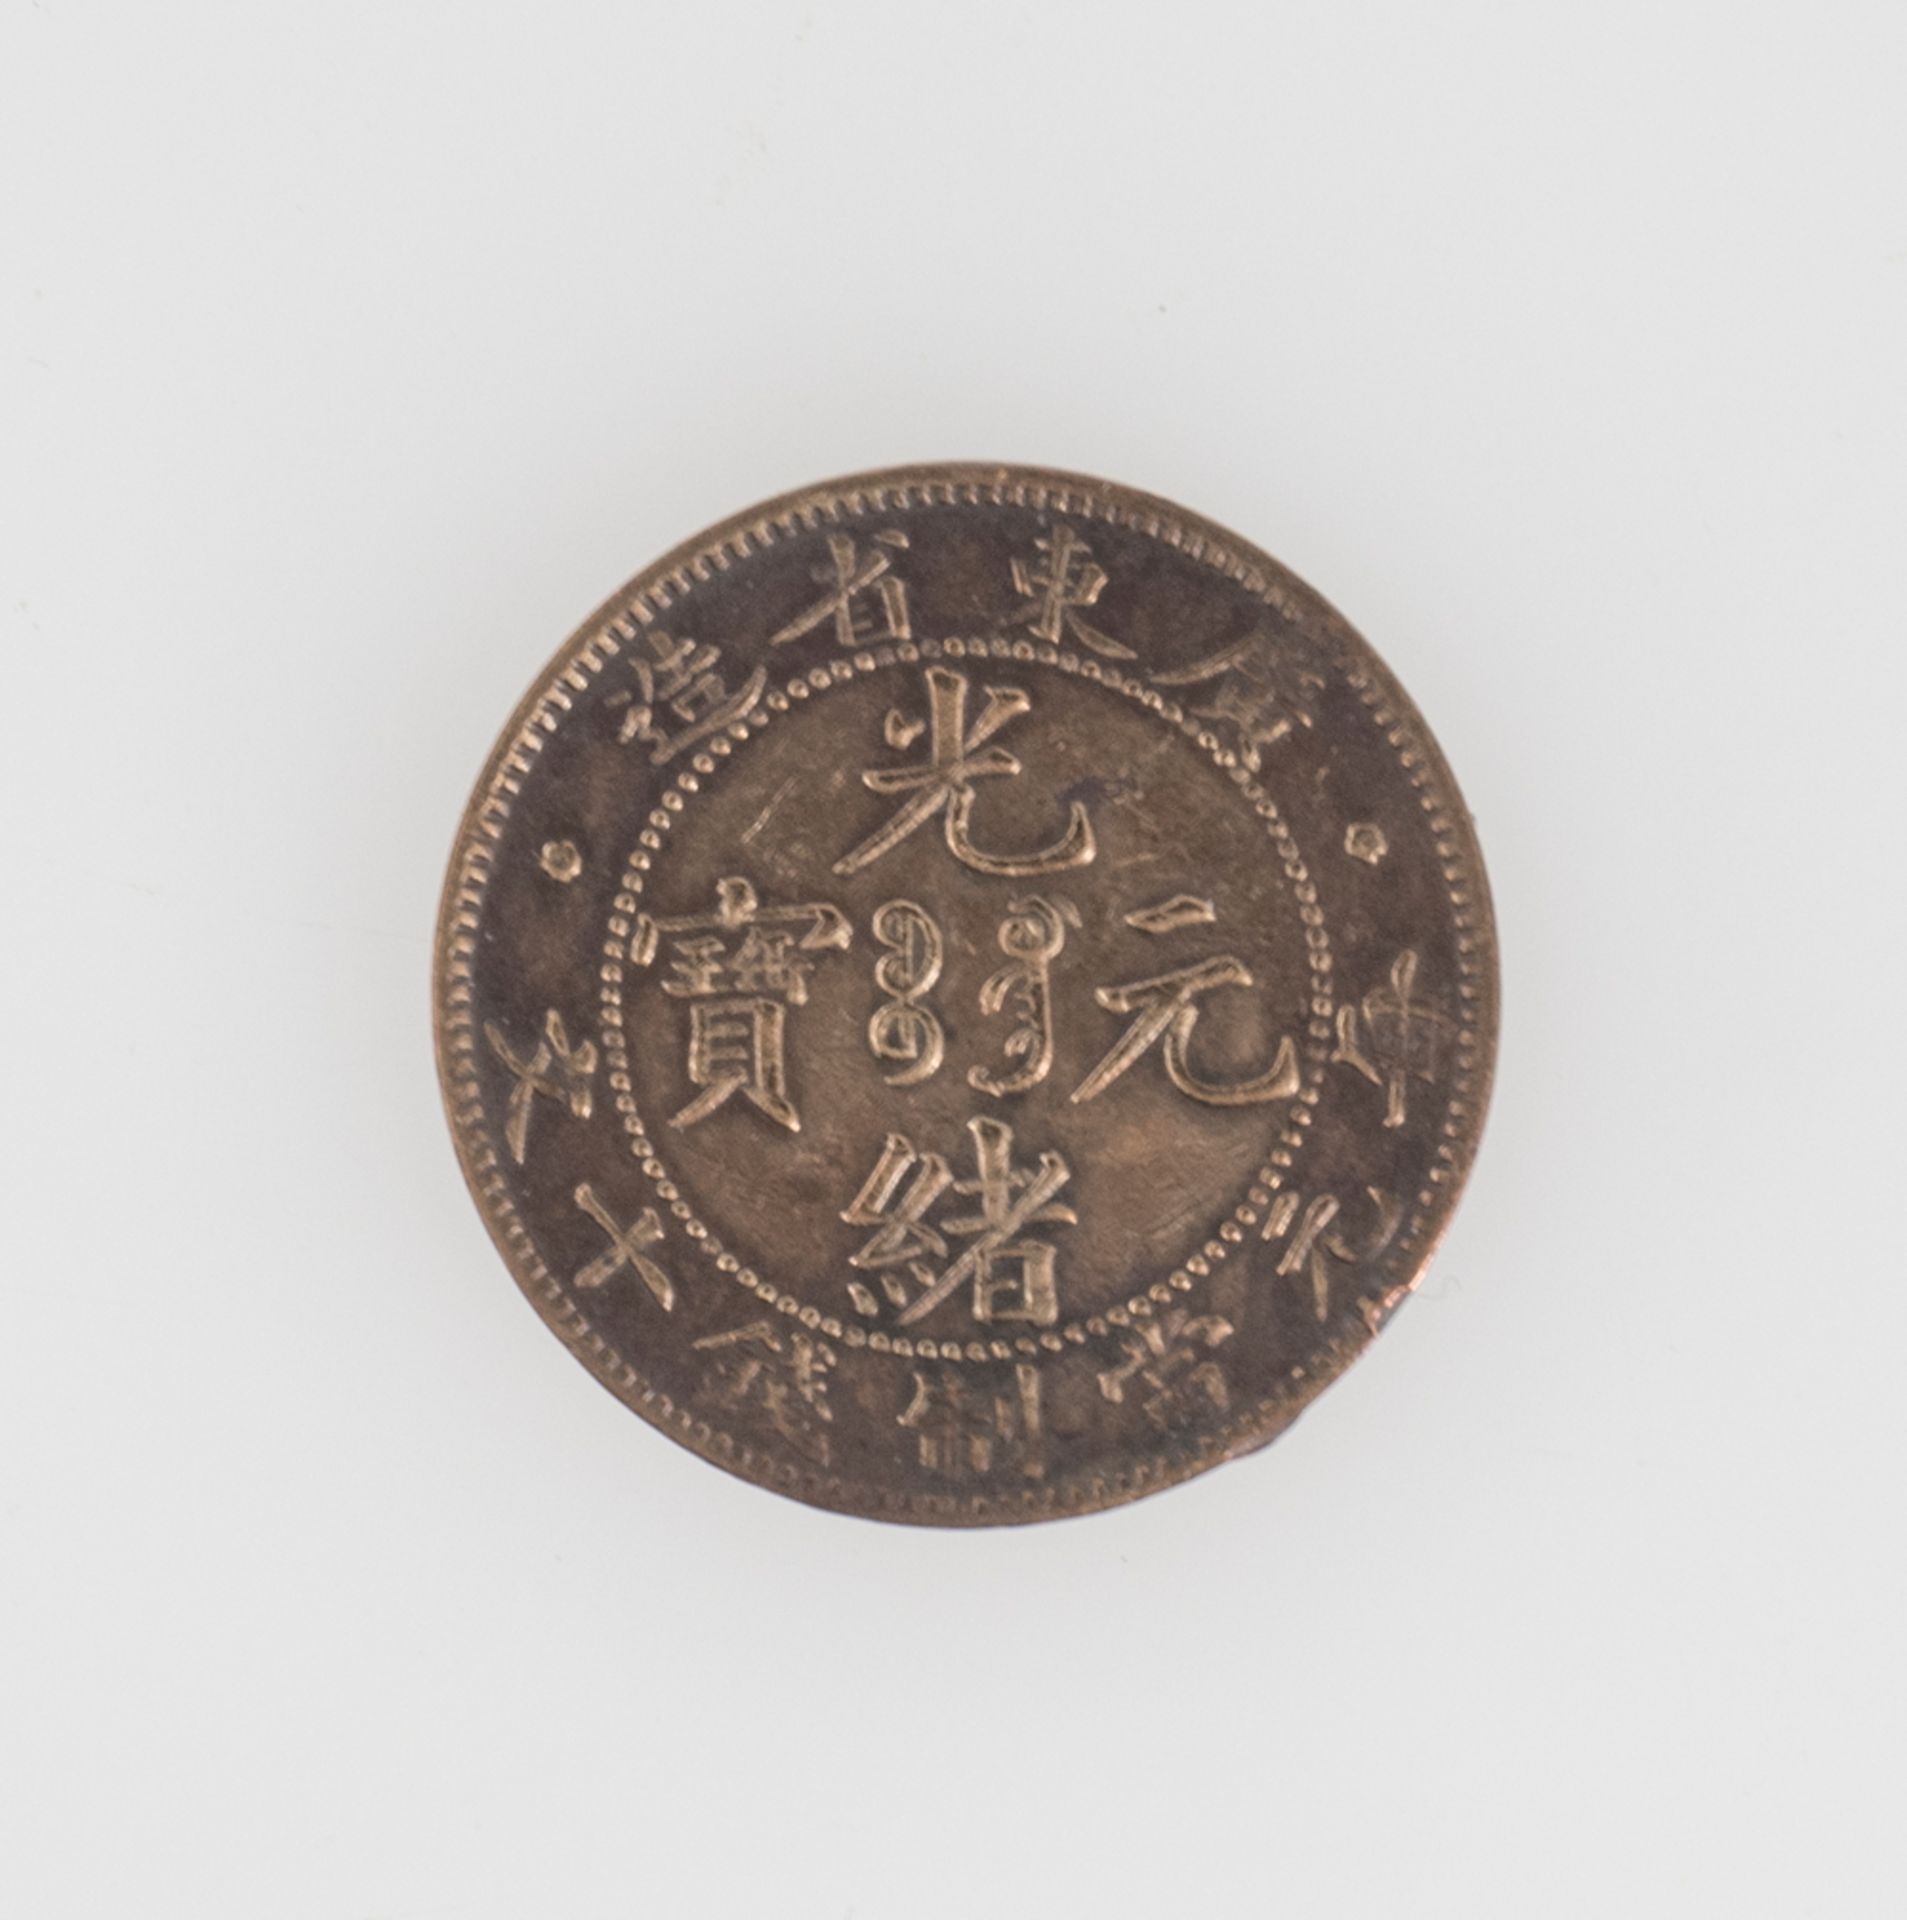 China Kwangtung, 10 Cash. Gewicht: ca. 7,6 g, Durchmesser ca. 22 mm. Erhaltung: ss. - Bild 2 aus 2